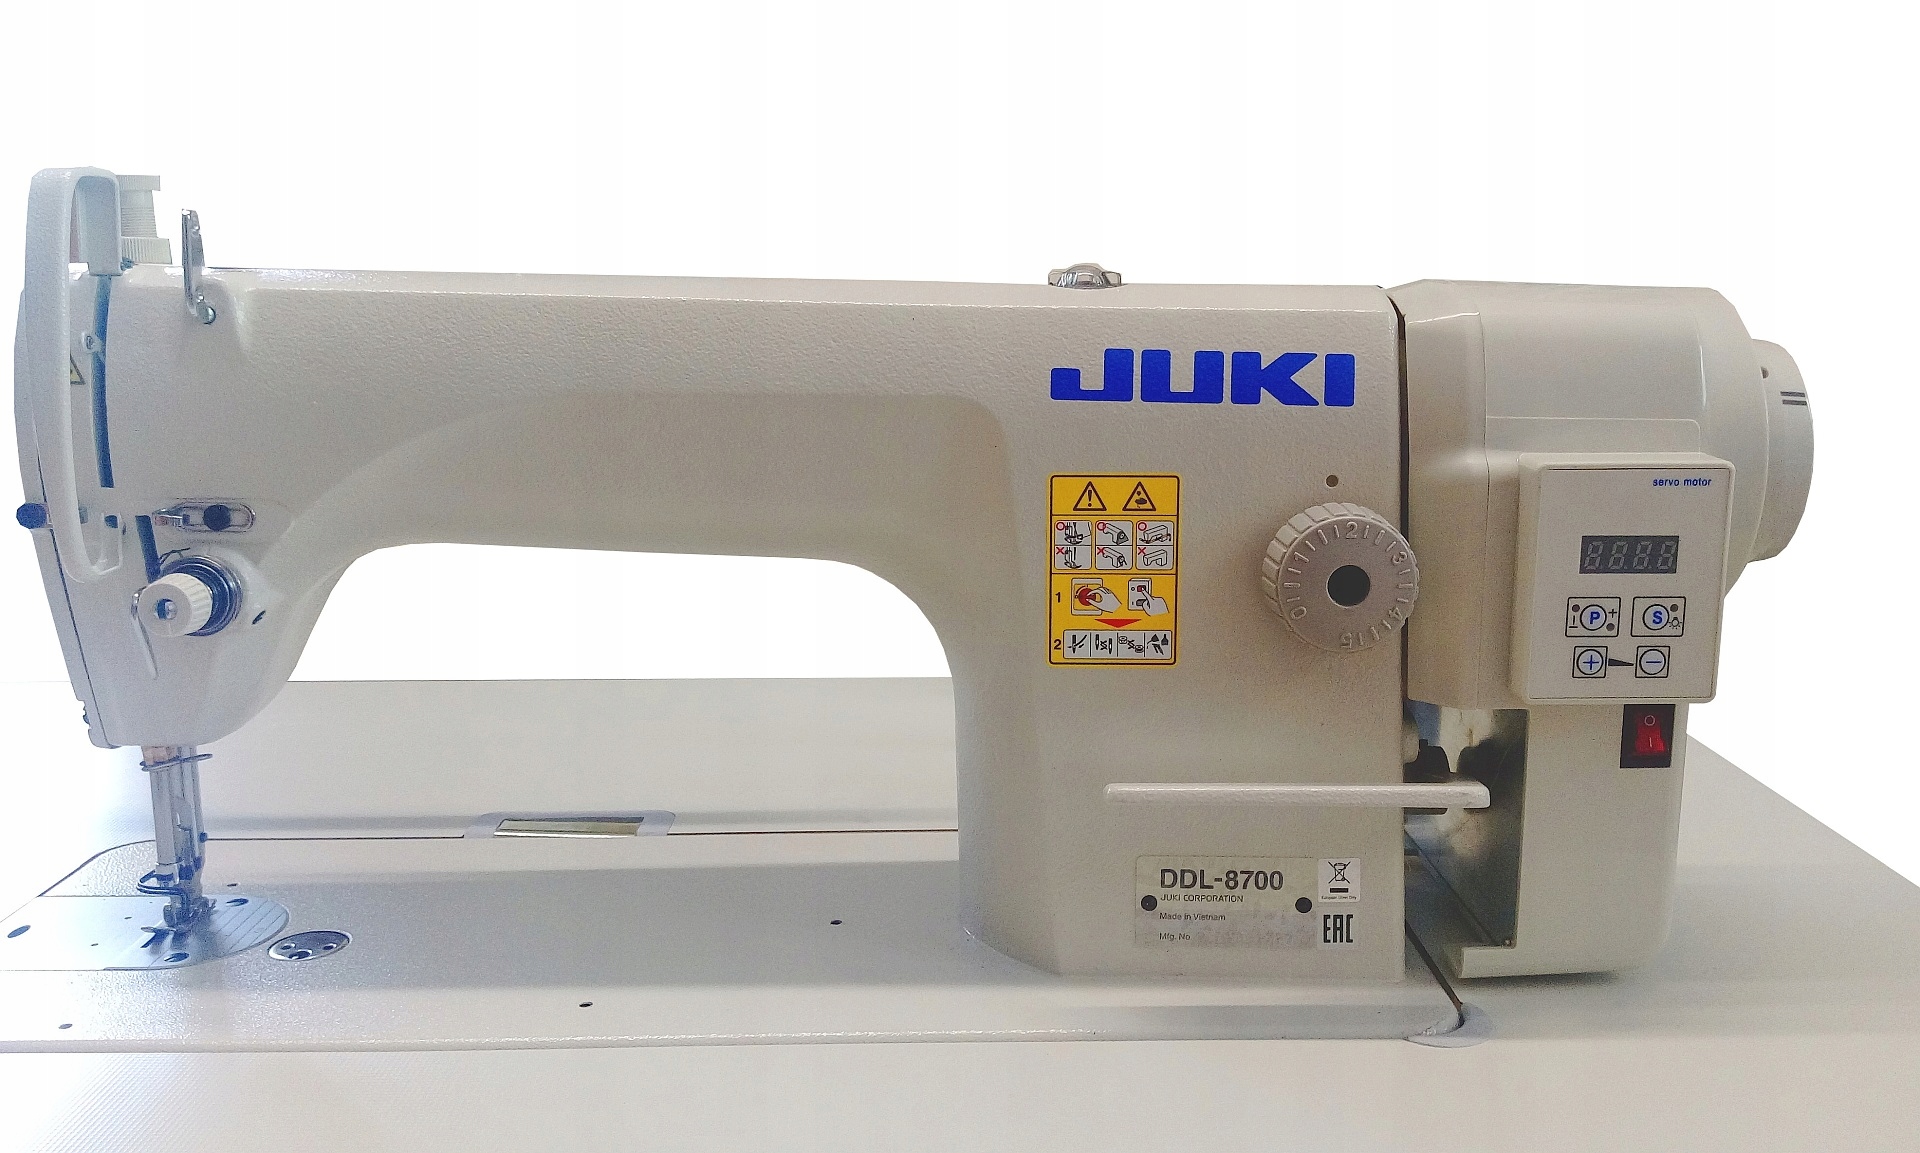 Машинки juki купить. Juki DDL-8700. Джуки ДДЛ 8700. Швейная машина Juki 8700. Промышленная швейная машинка Juki DDL-8700.